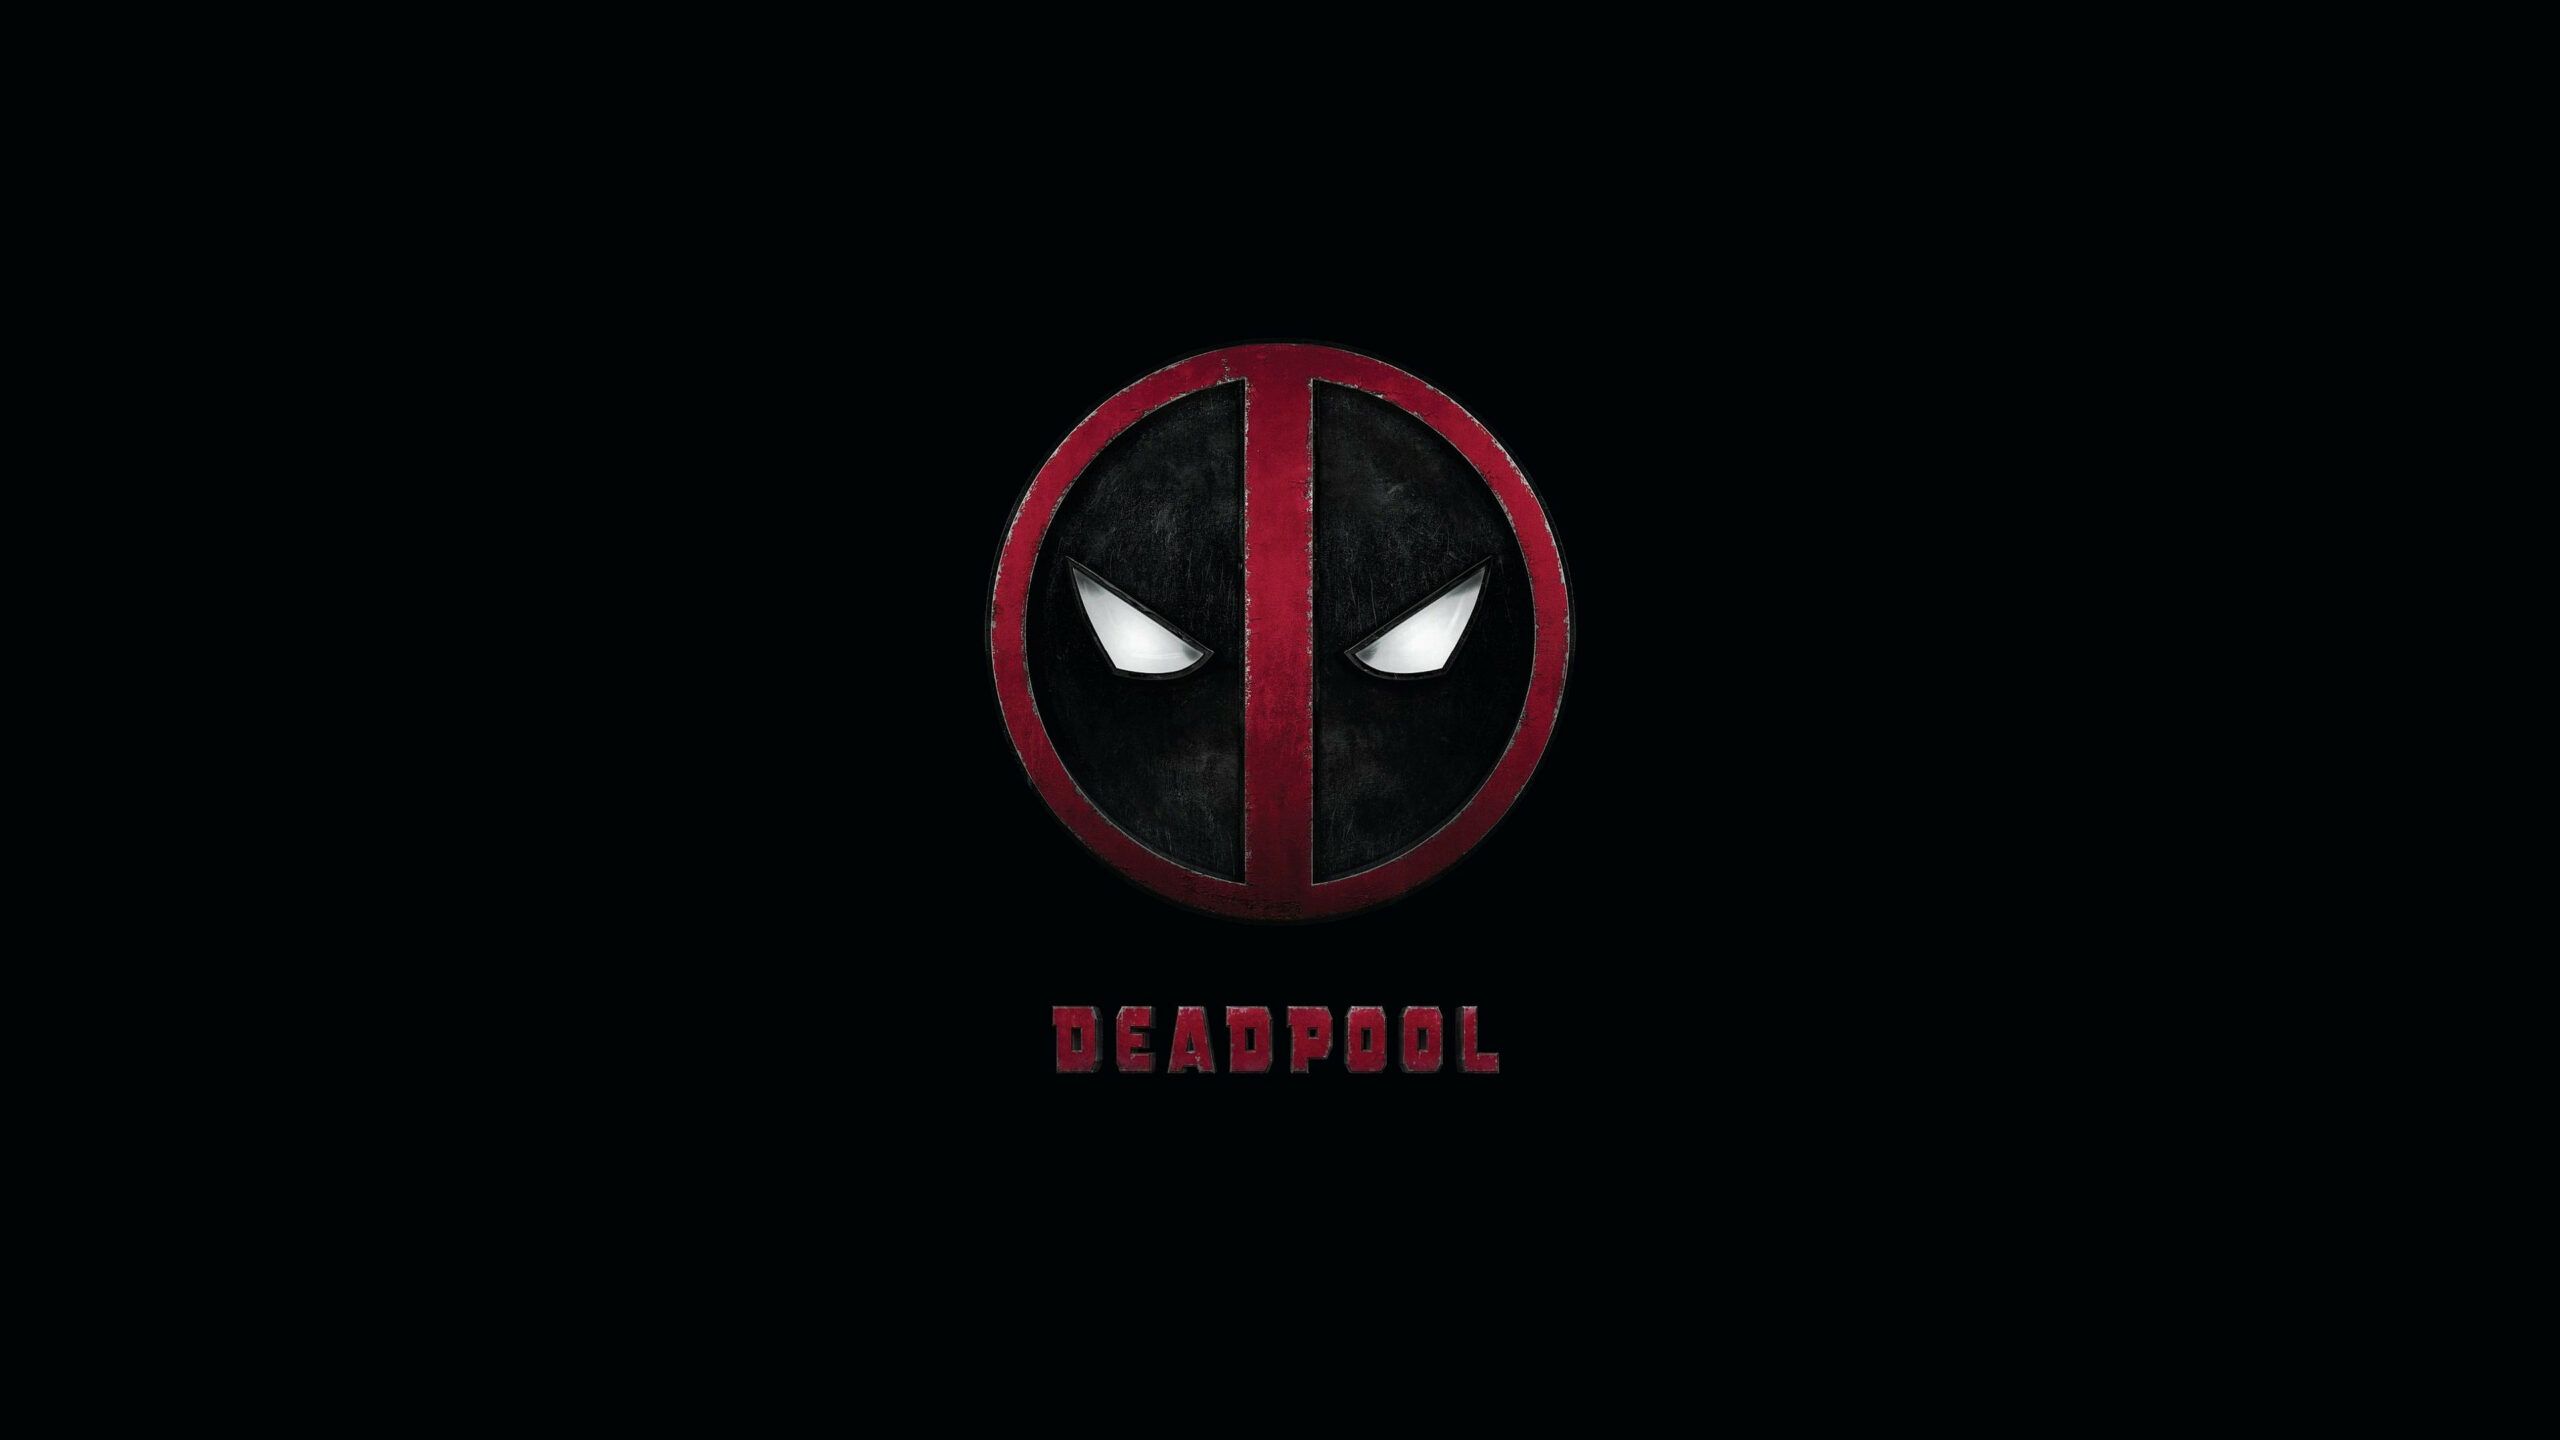 Best Of Deadpool Logos Wallpaper. Deadpool wallpaper, Deadpool logo wallpaper, Deadpool logo